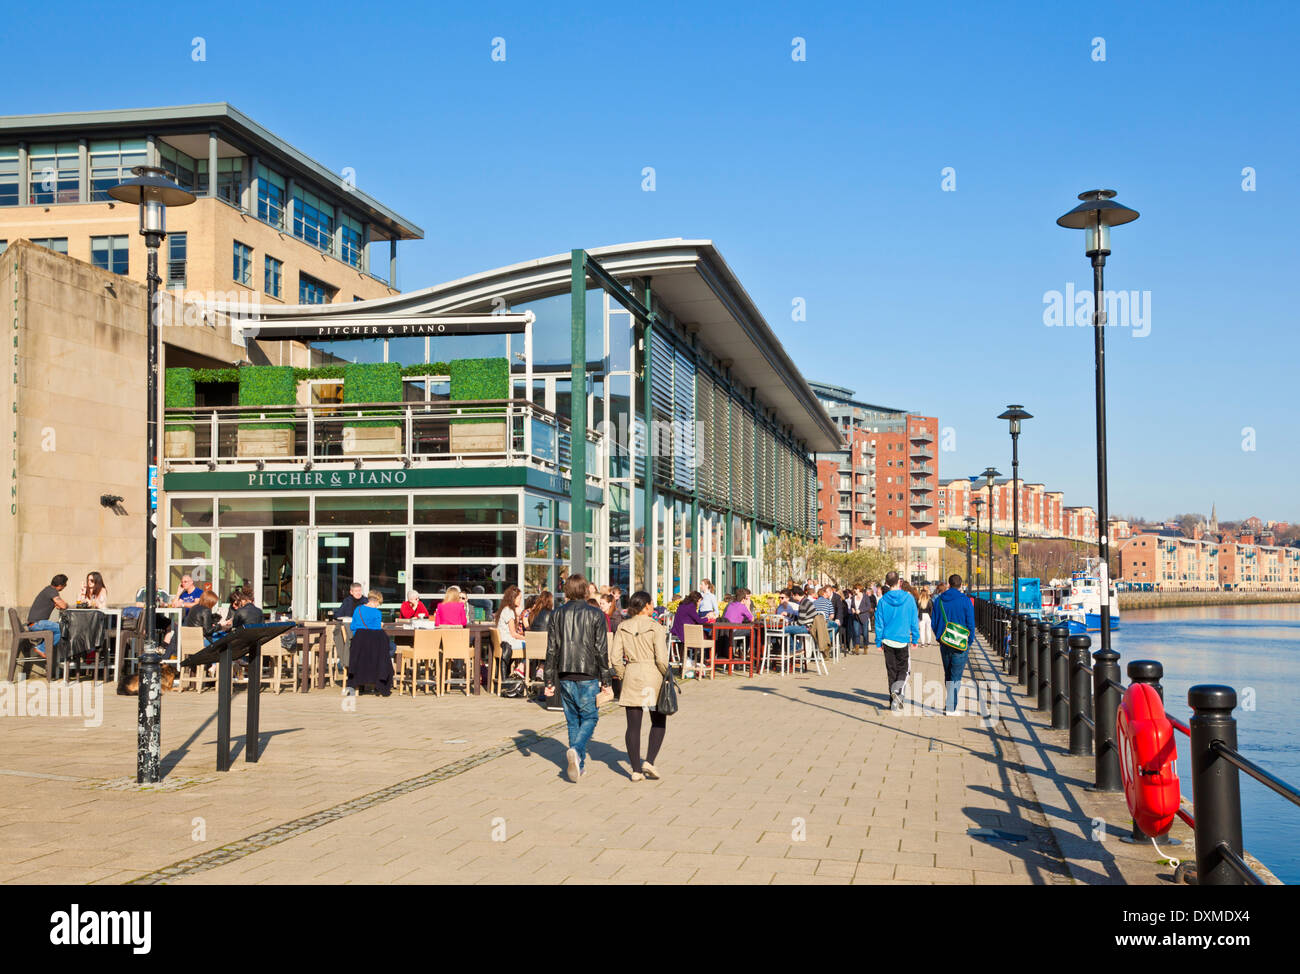 La brocca e piano bar e ristorante sulla banchina di newcastle upon tyne Tyne and Wear Tyneside Inghilterra UK GB EU Europe Foto Stock